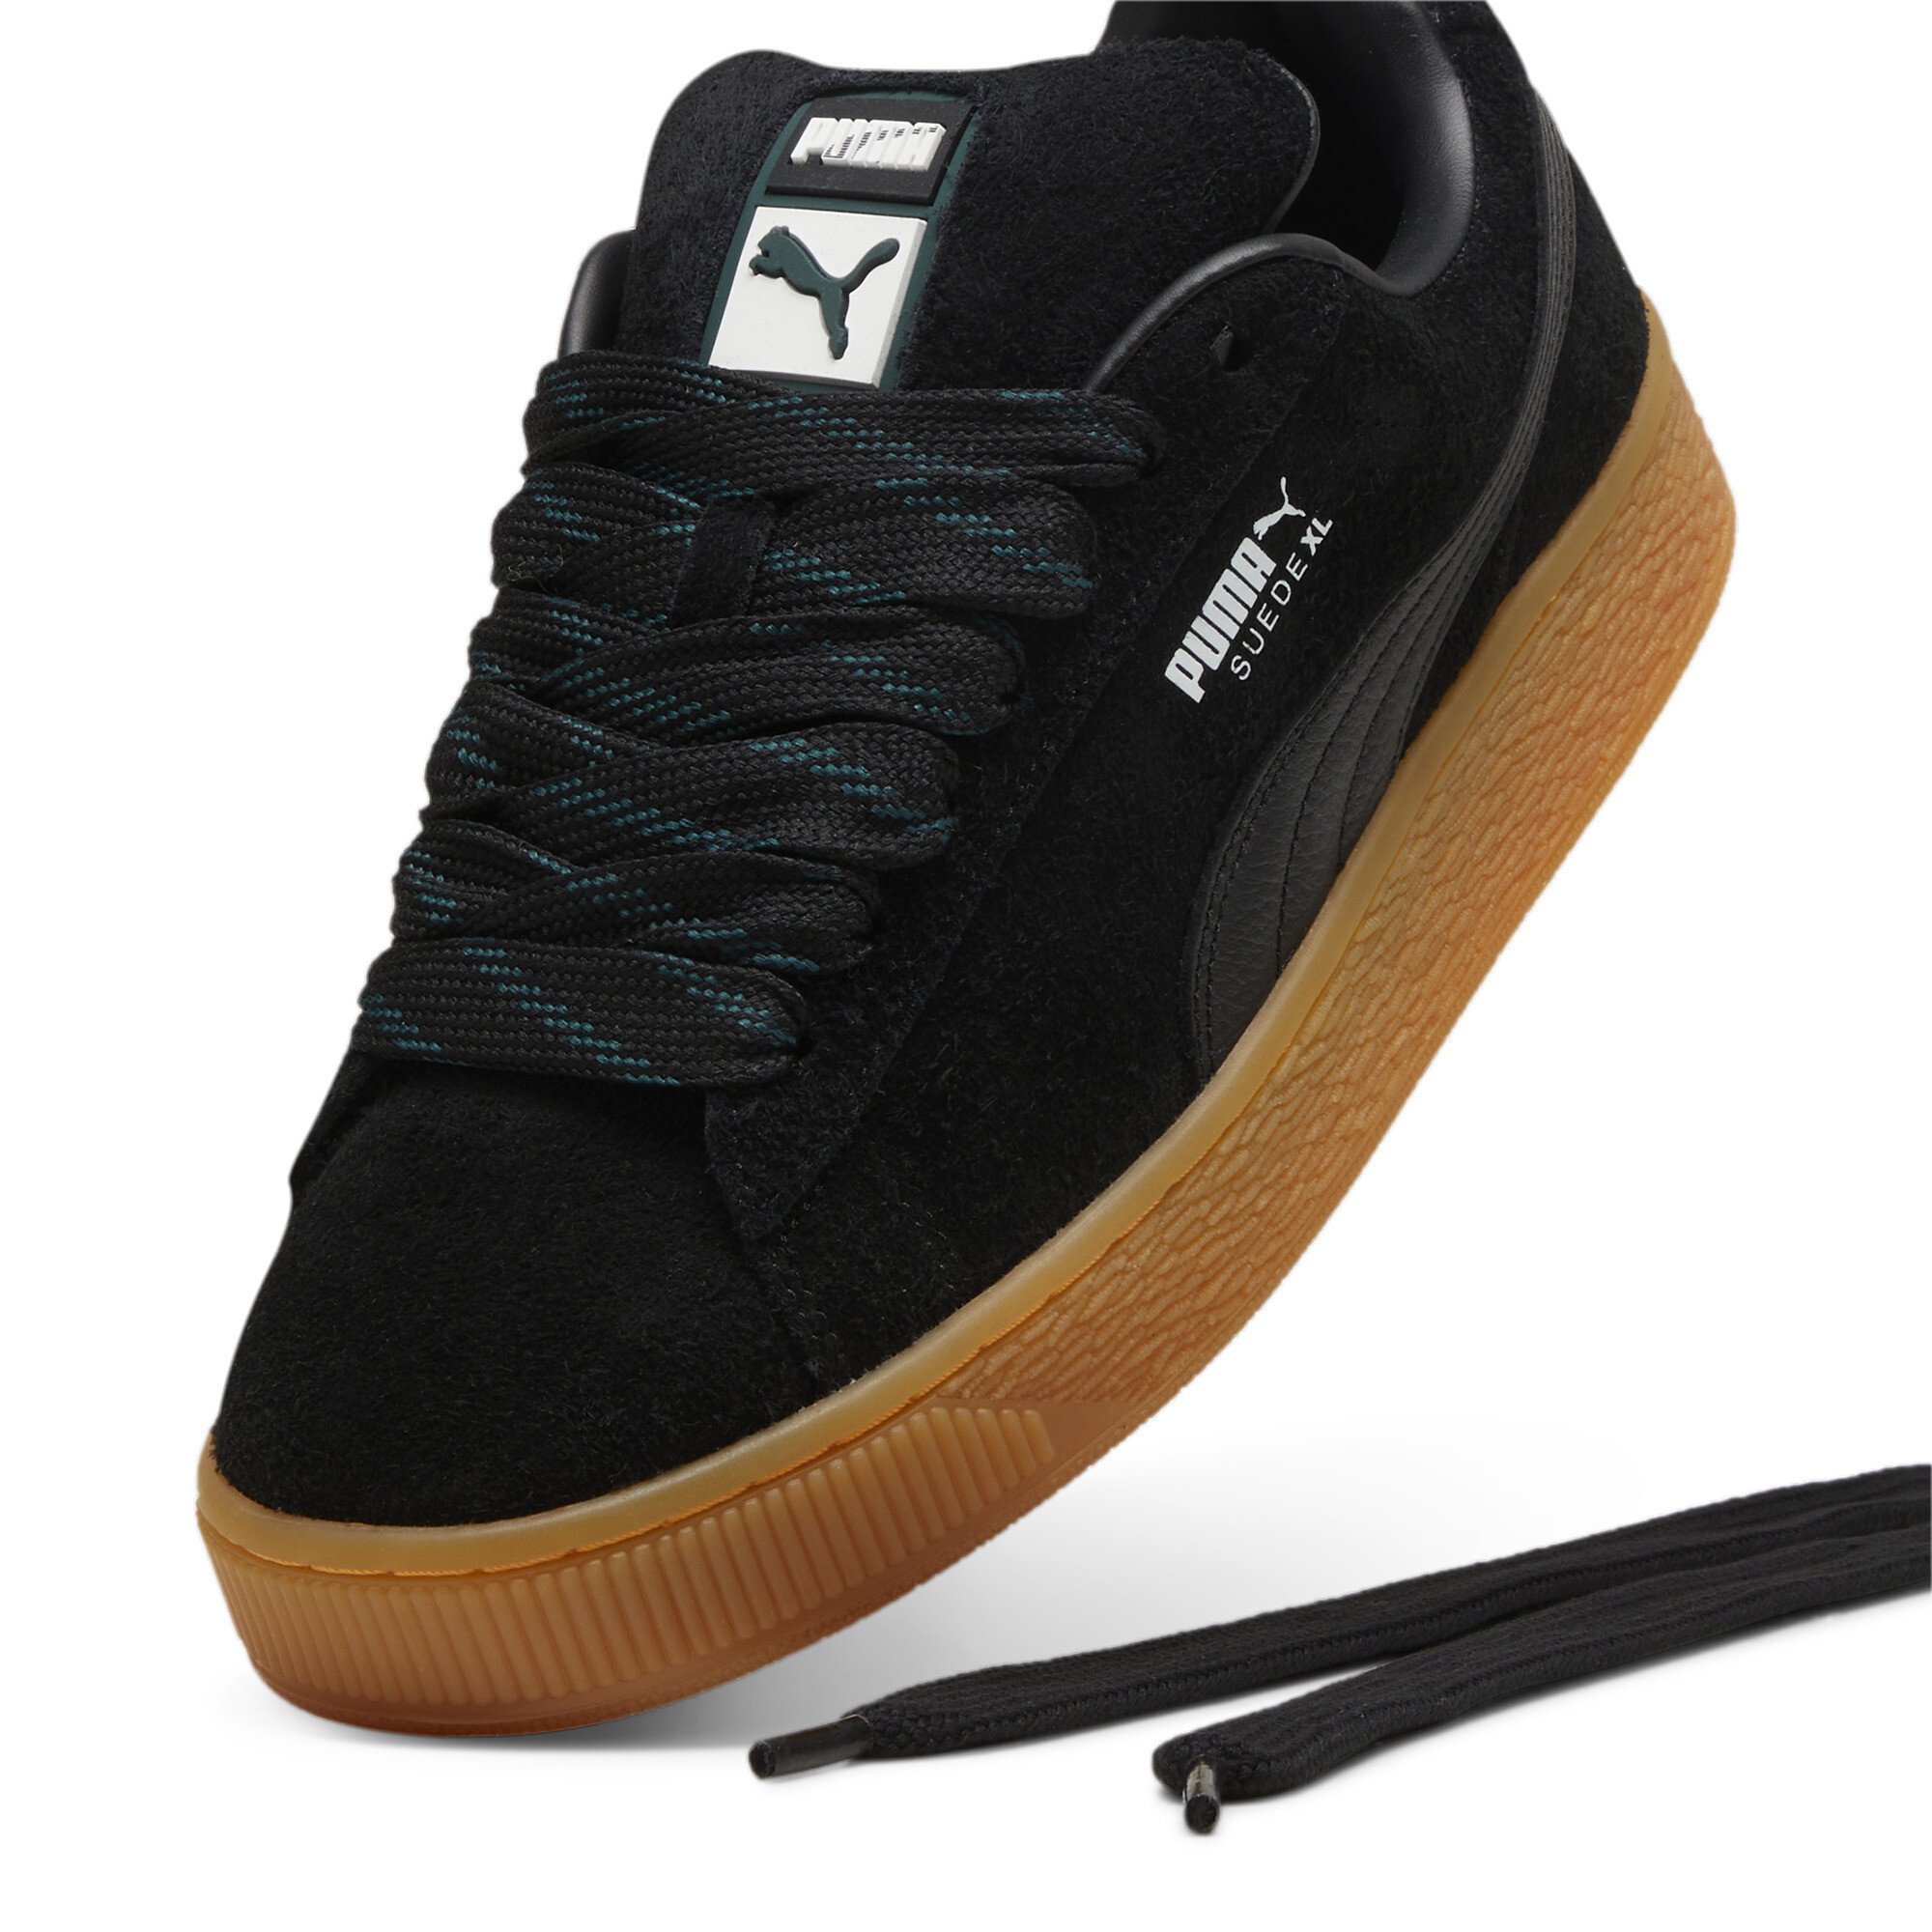 Puma Suede XL Flecked Unisex, Black, Size 40, Shoes